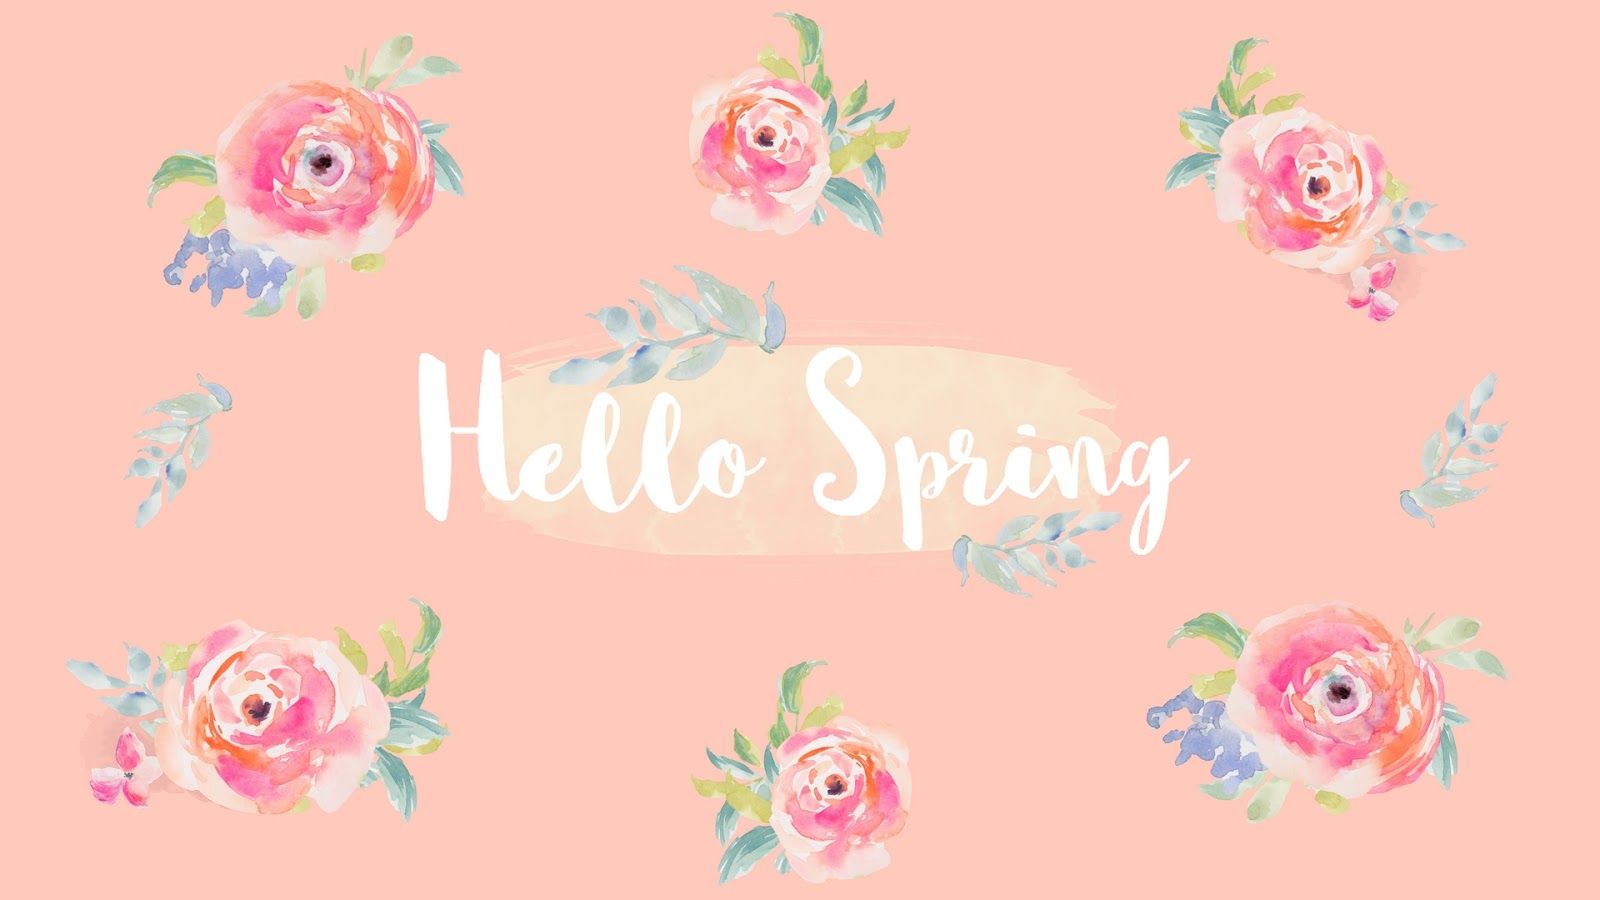 Free Spring Desktop Wallpaper. Elizabeth Anne. Spring desktop wallpaper, Desktop wallpaper, Hello spring